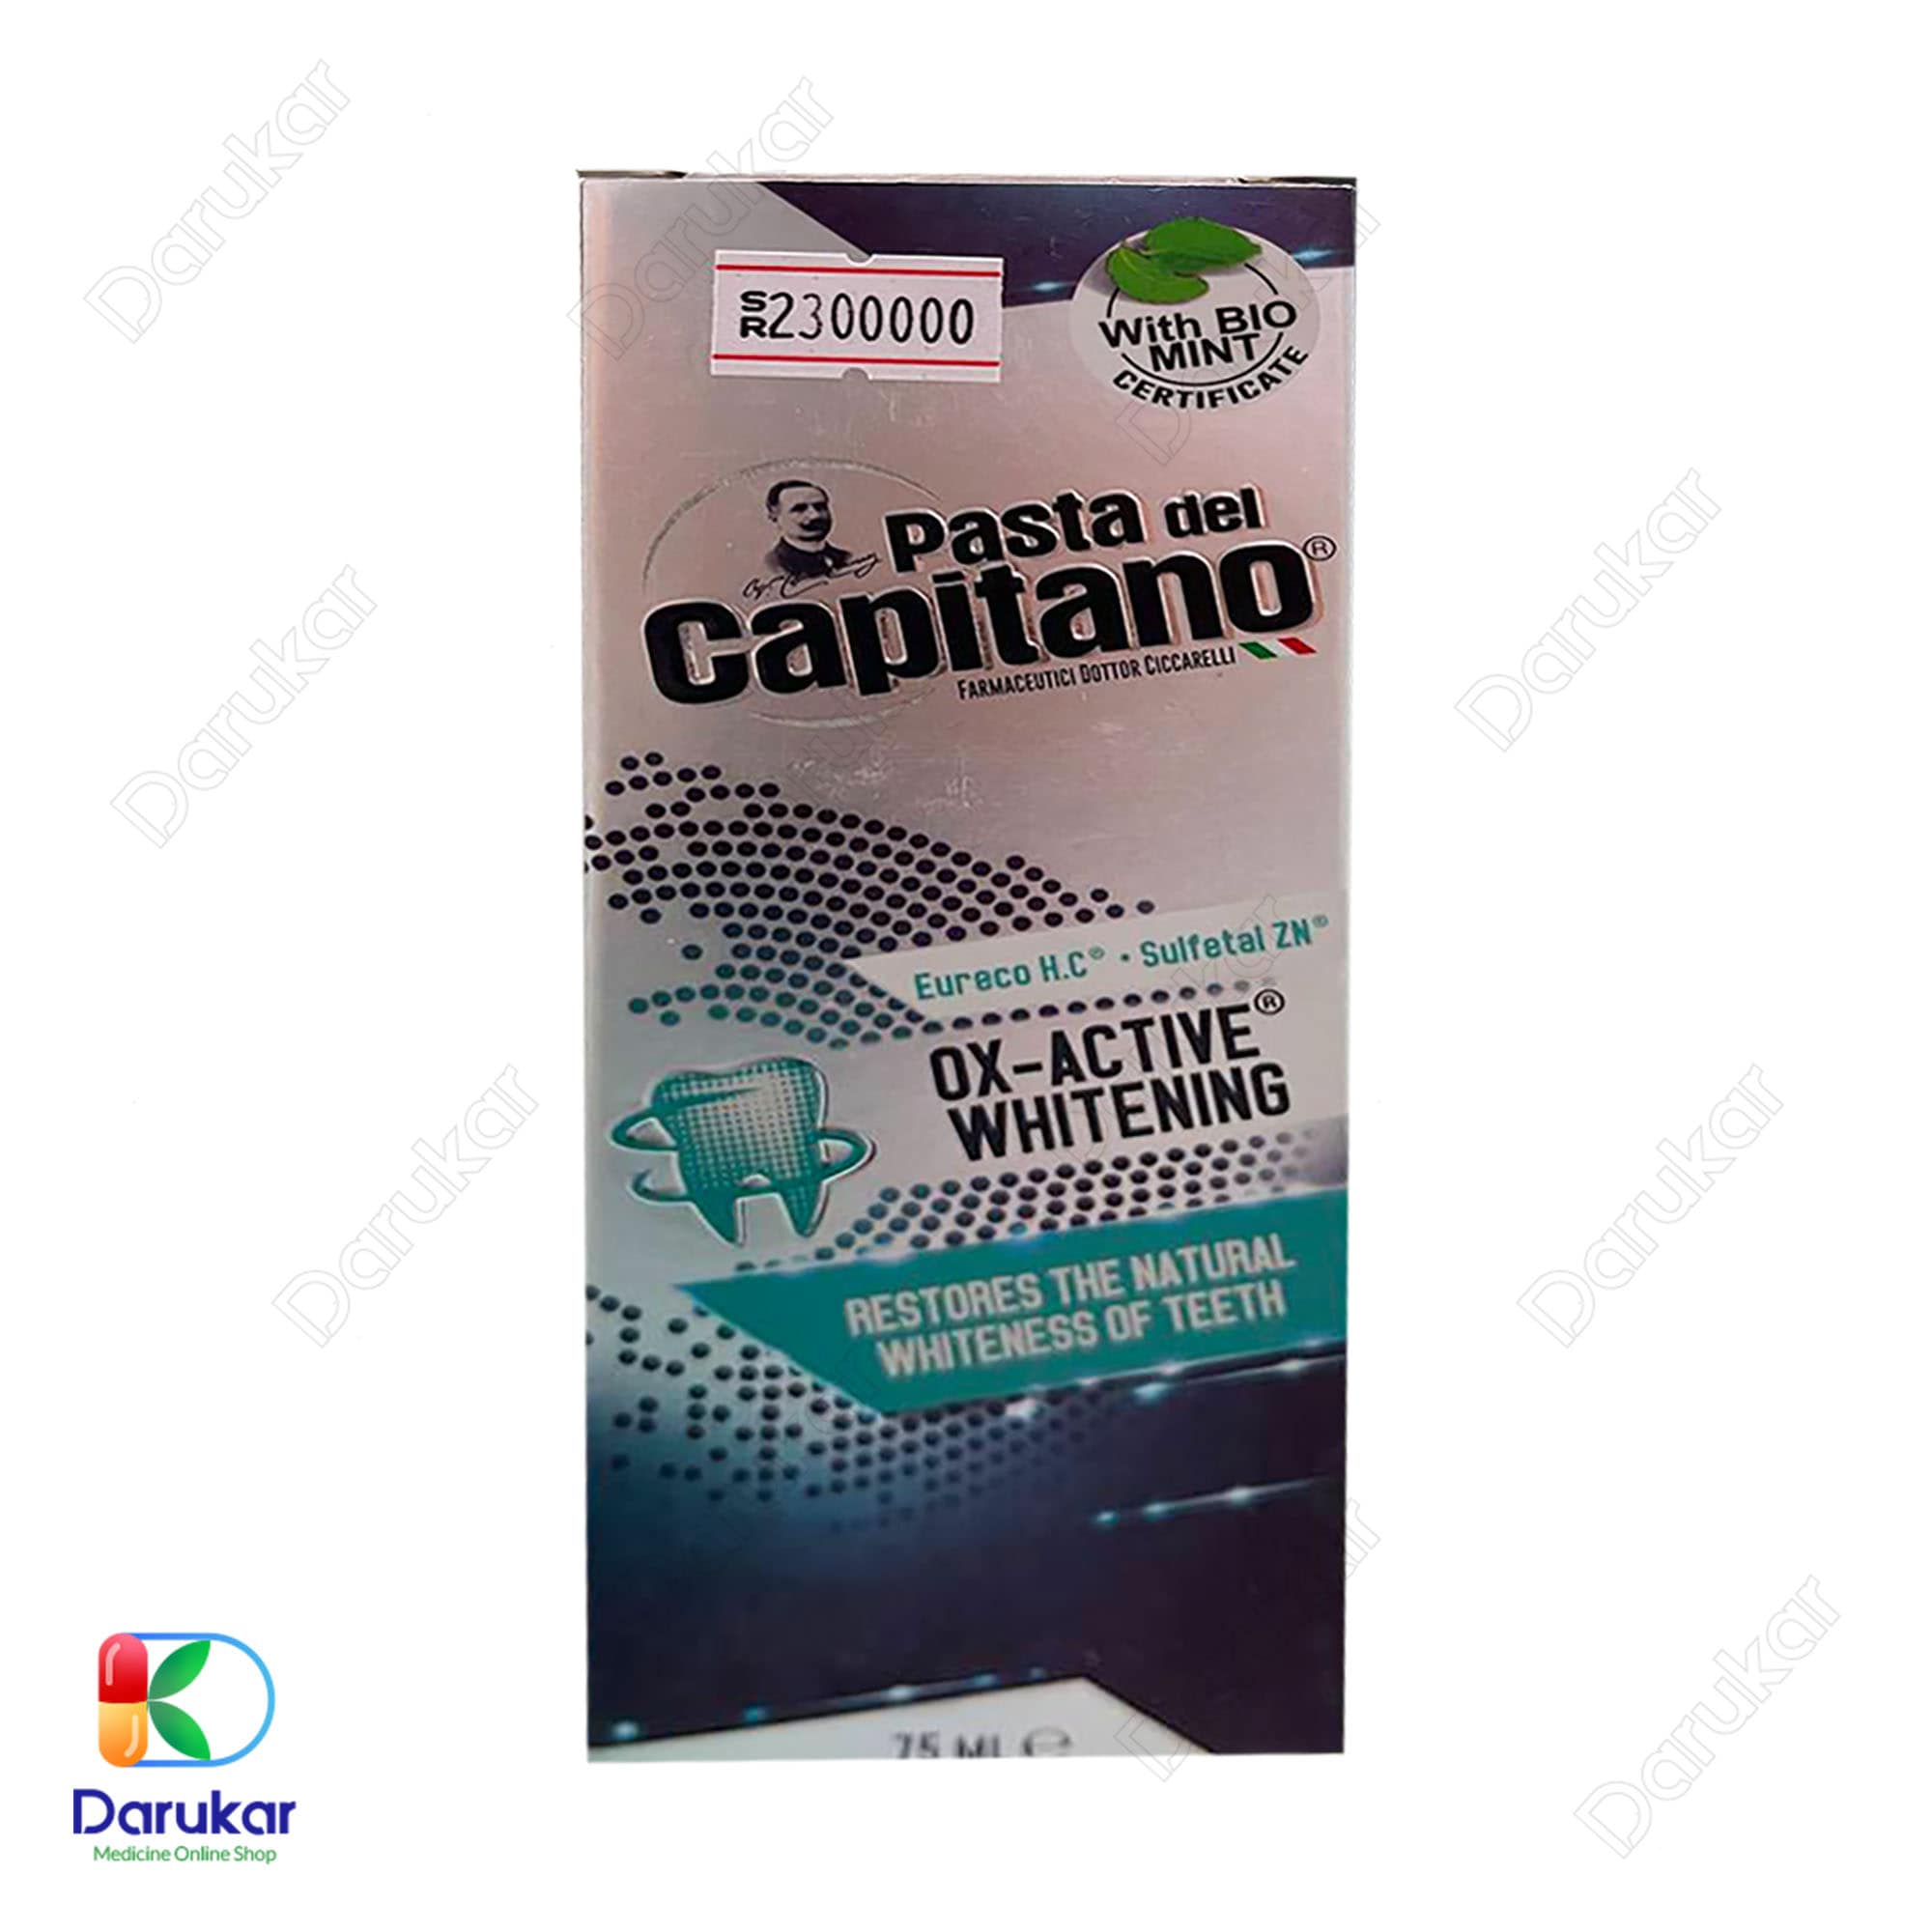 Pasta Del Capitano OX active Whitening toothpaste 75 ml Image Gallery